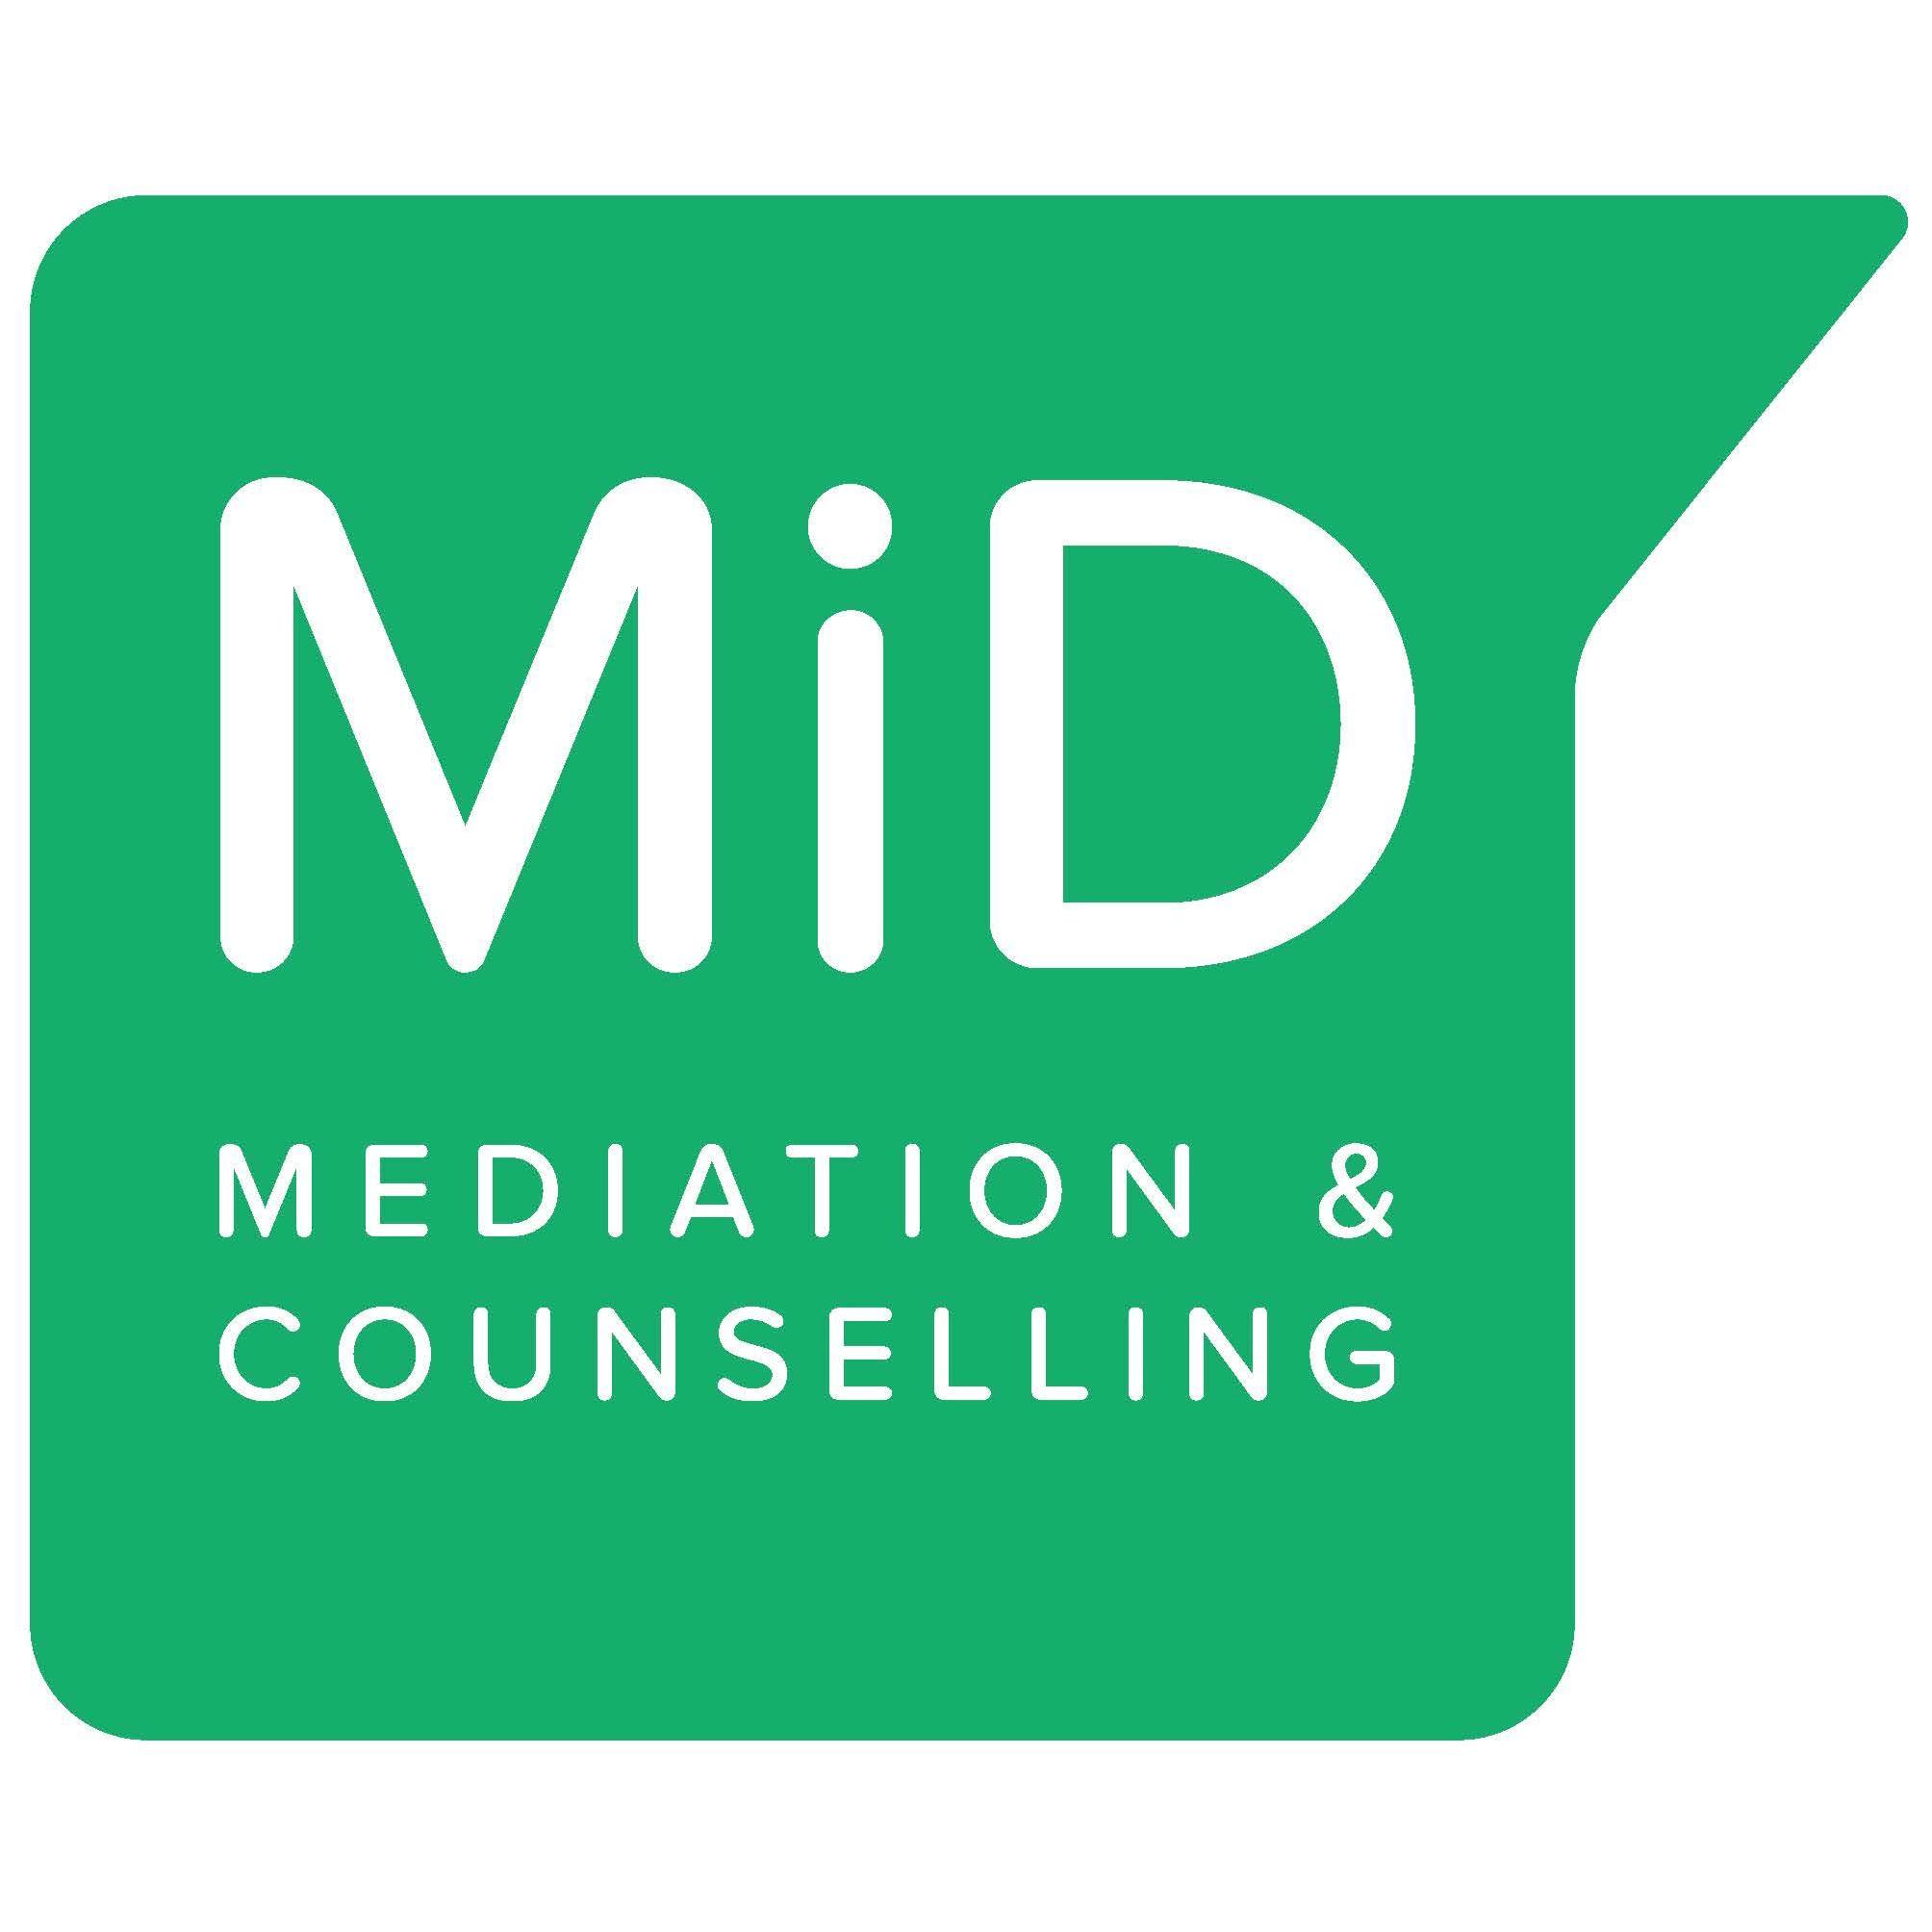 LOGO M I D Mediation & Counselling Hampton 020 8891 6860